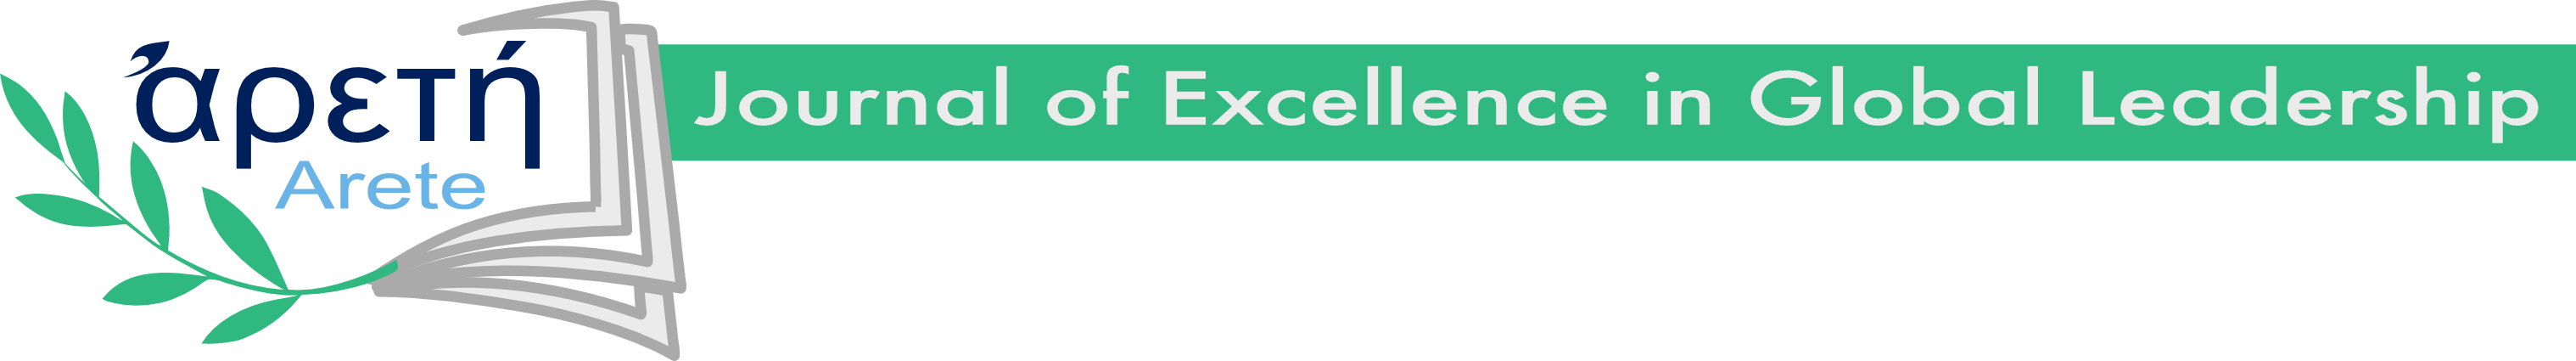 Journal of Excellence in Global Leadership header 2